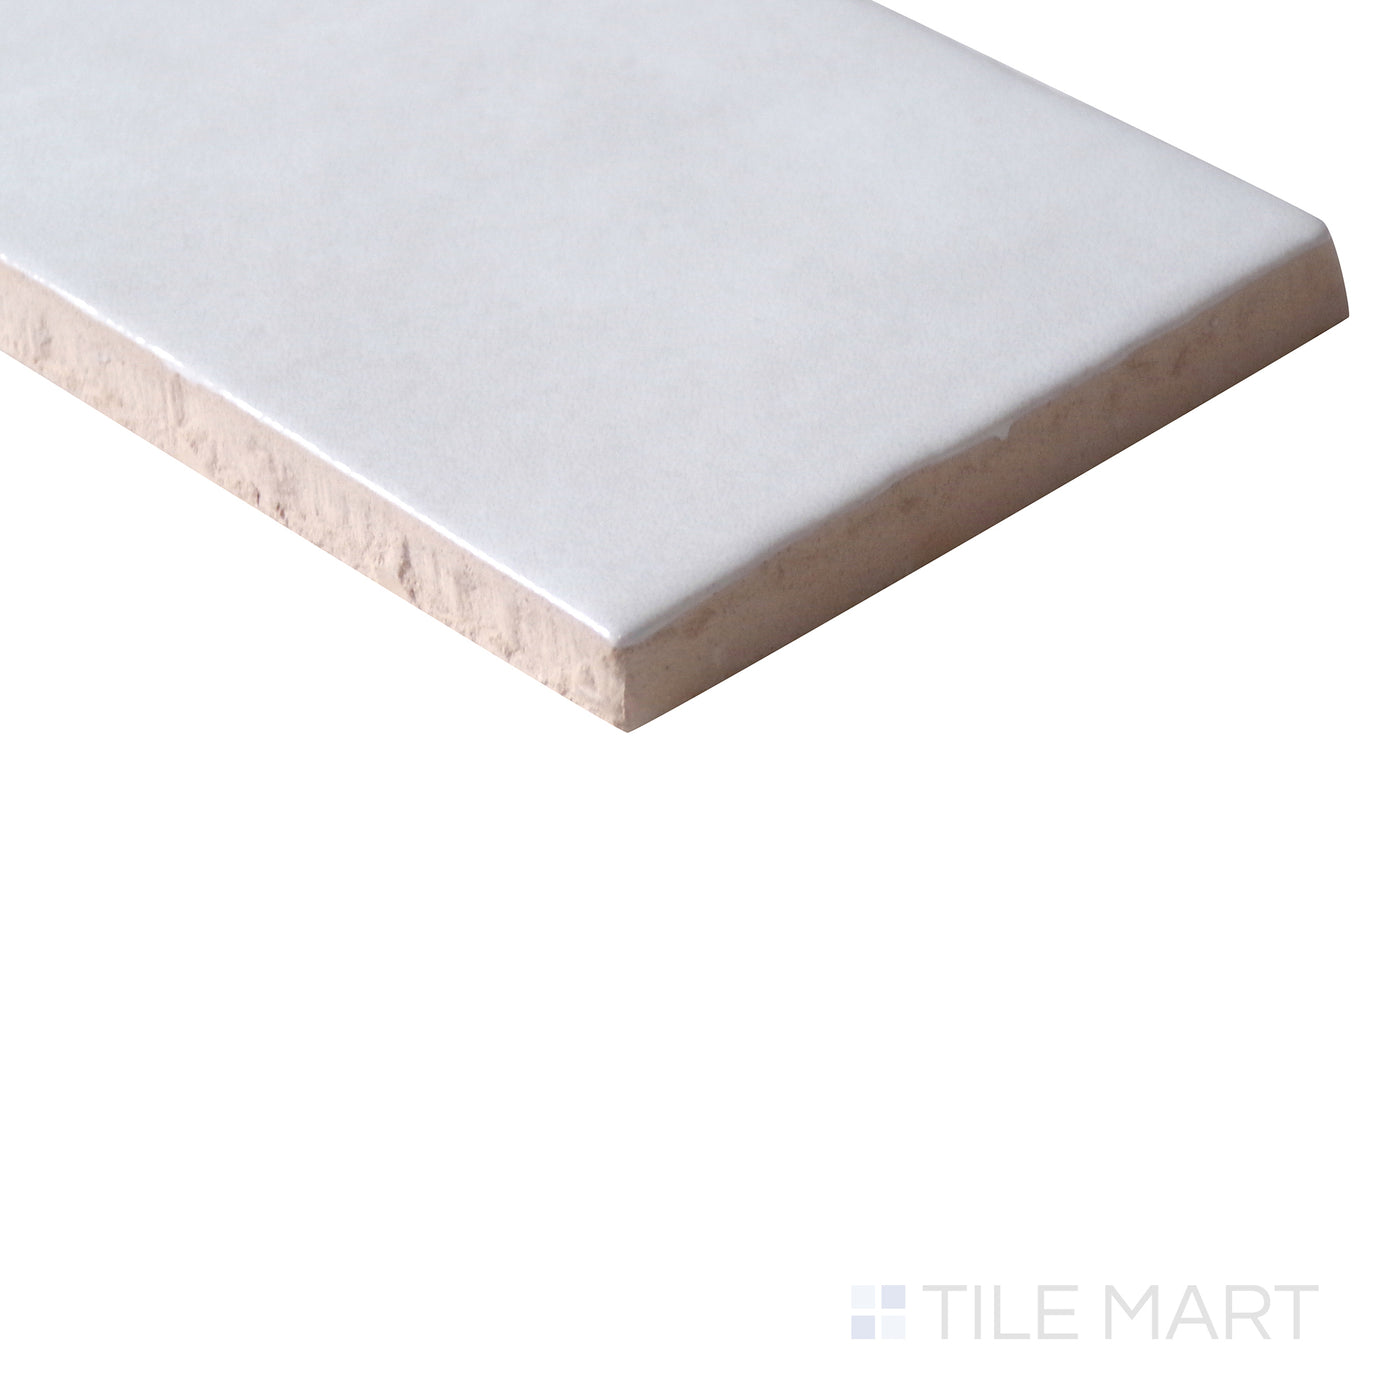 Cloe Glazed Ceramic Field Tile 2-1/2X8 White Gloss